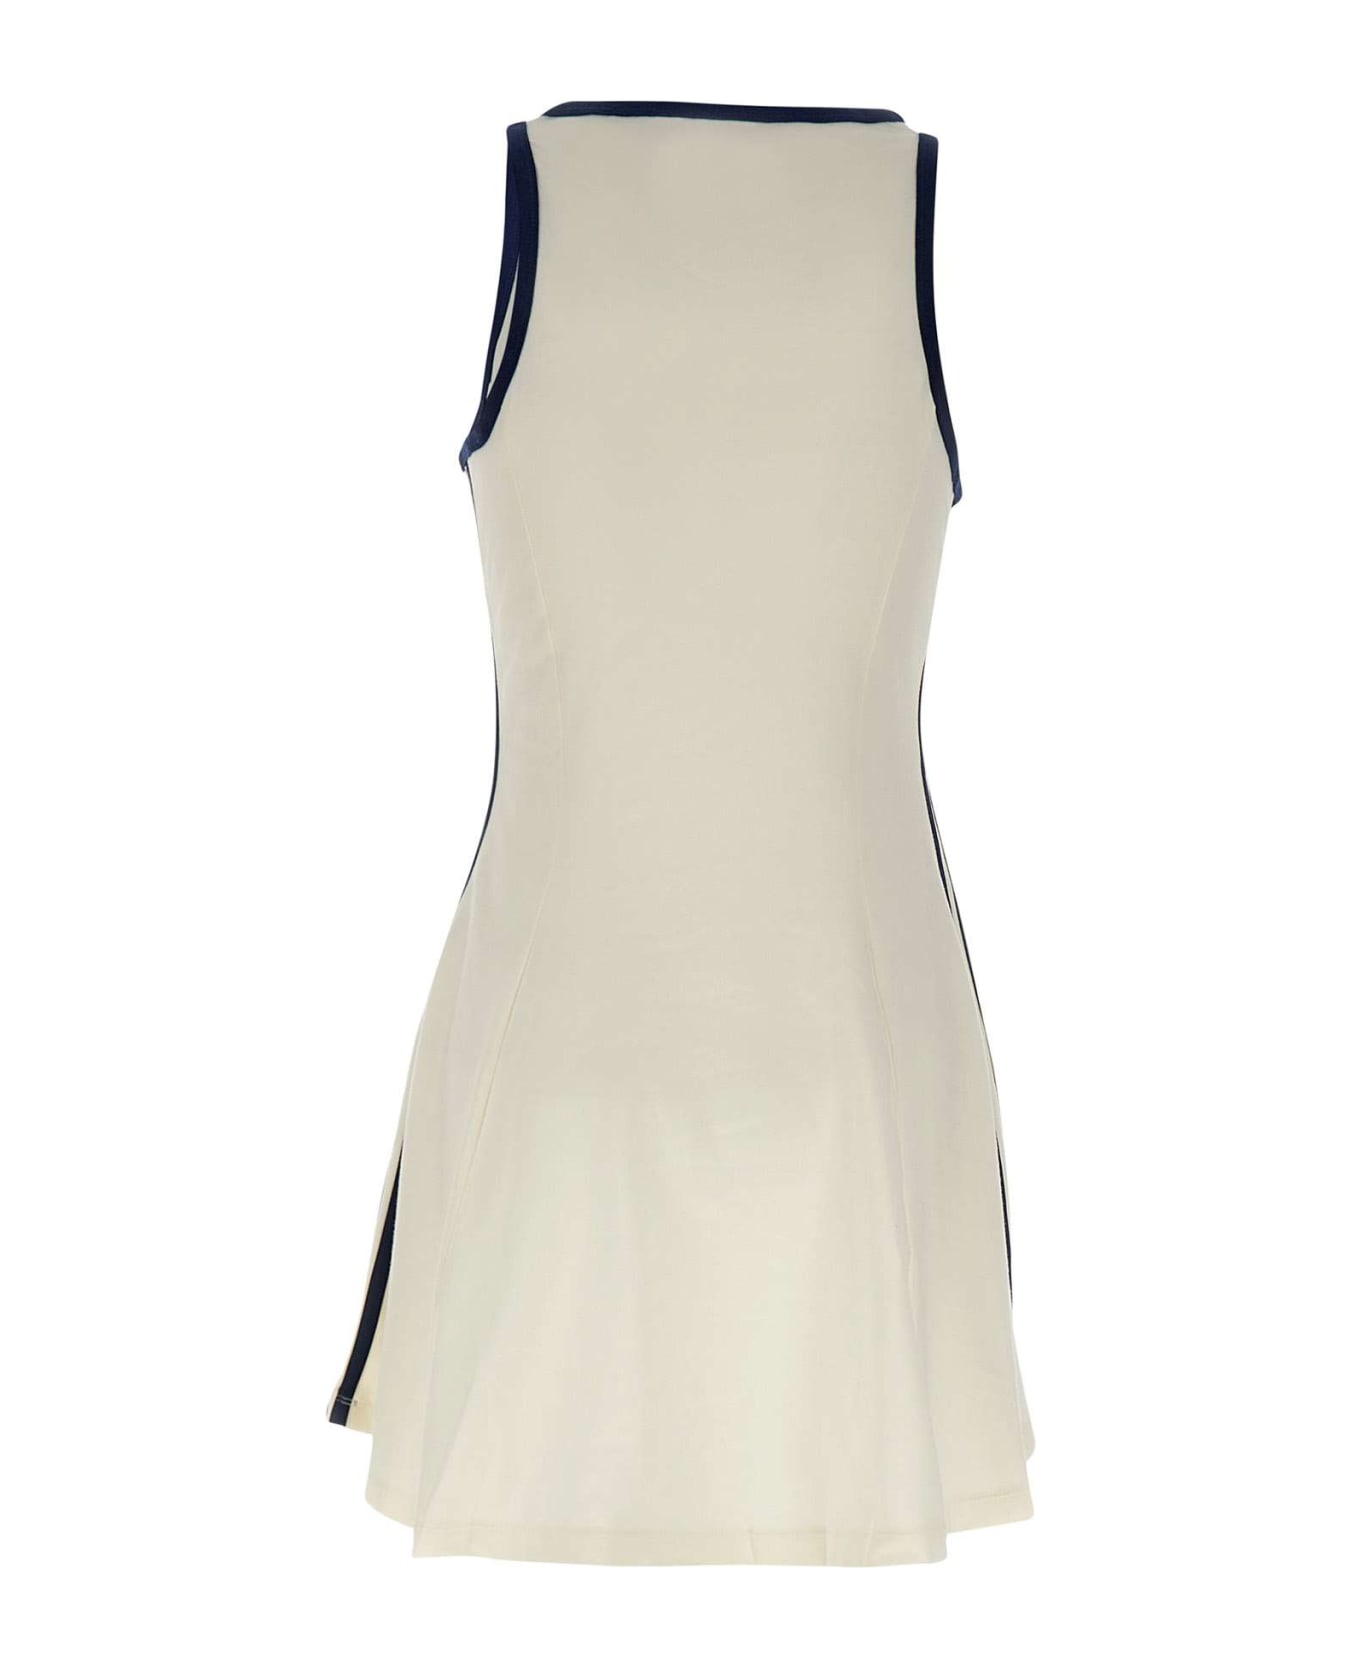 Adidas "tank Dress" Cotton Dress - WHITE